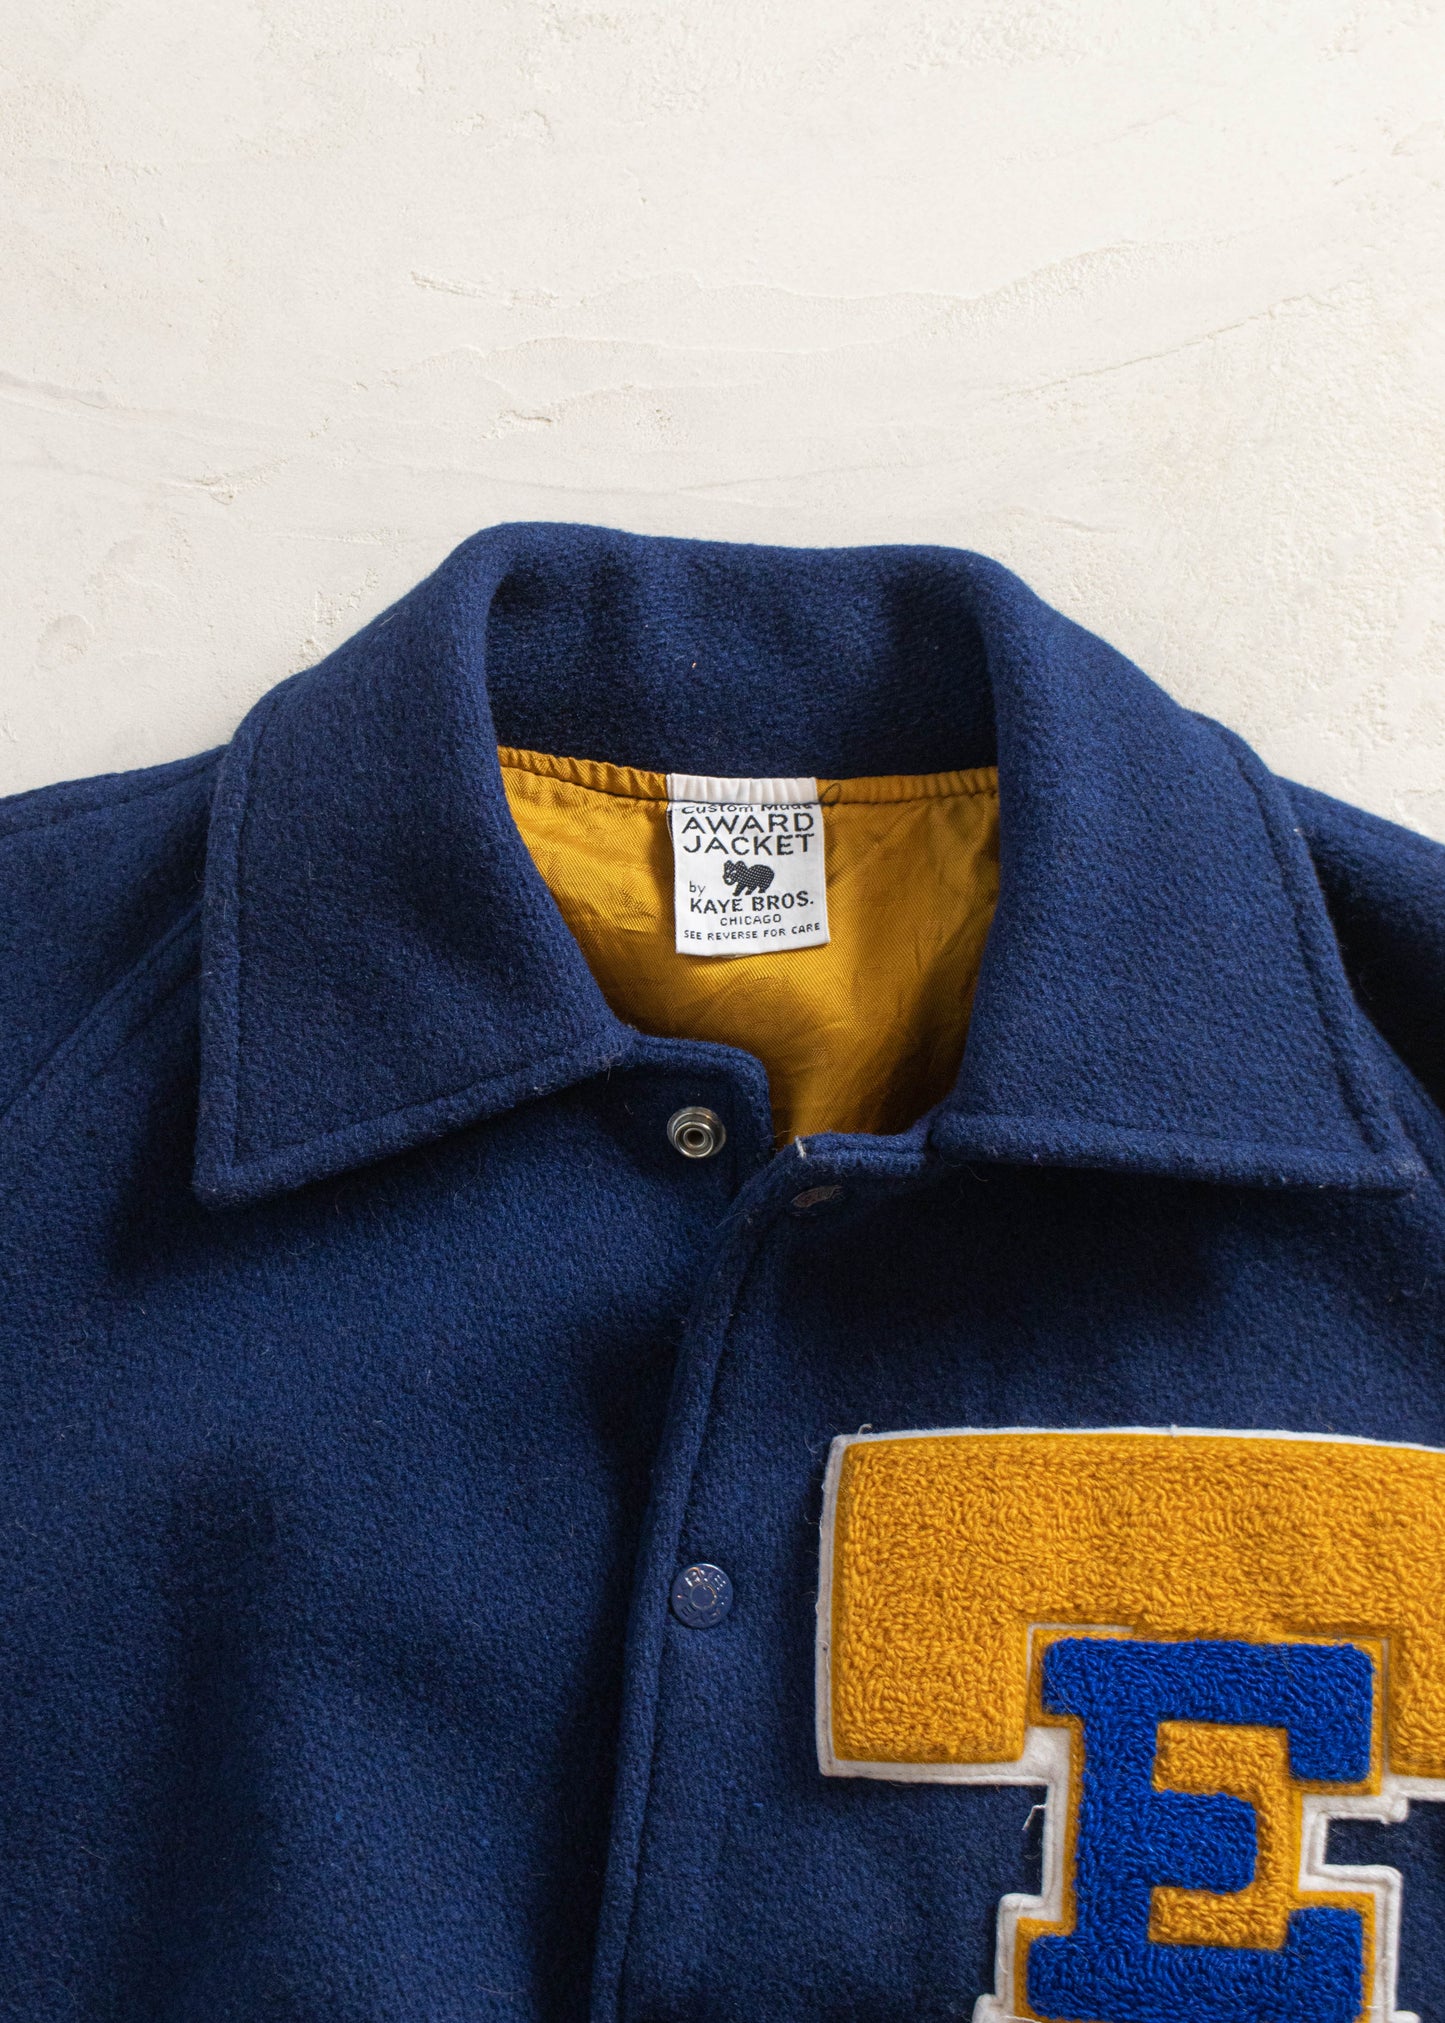 Vintage 1970s Kaye Bros Varsity Jacket Size S/M